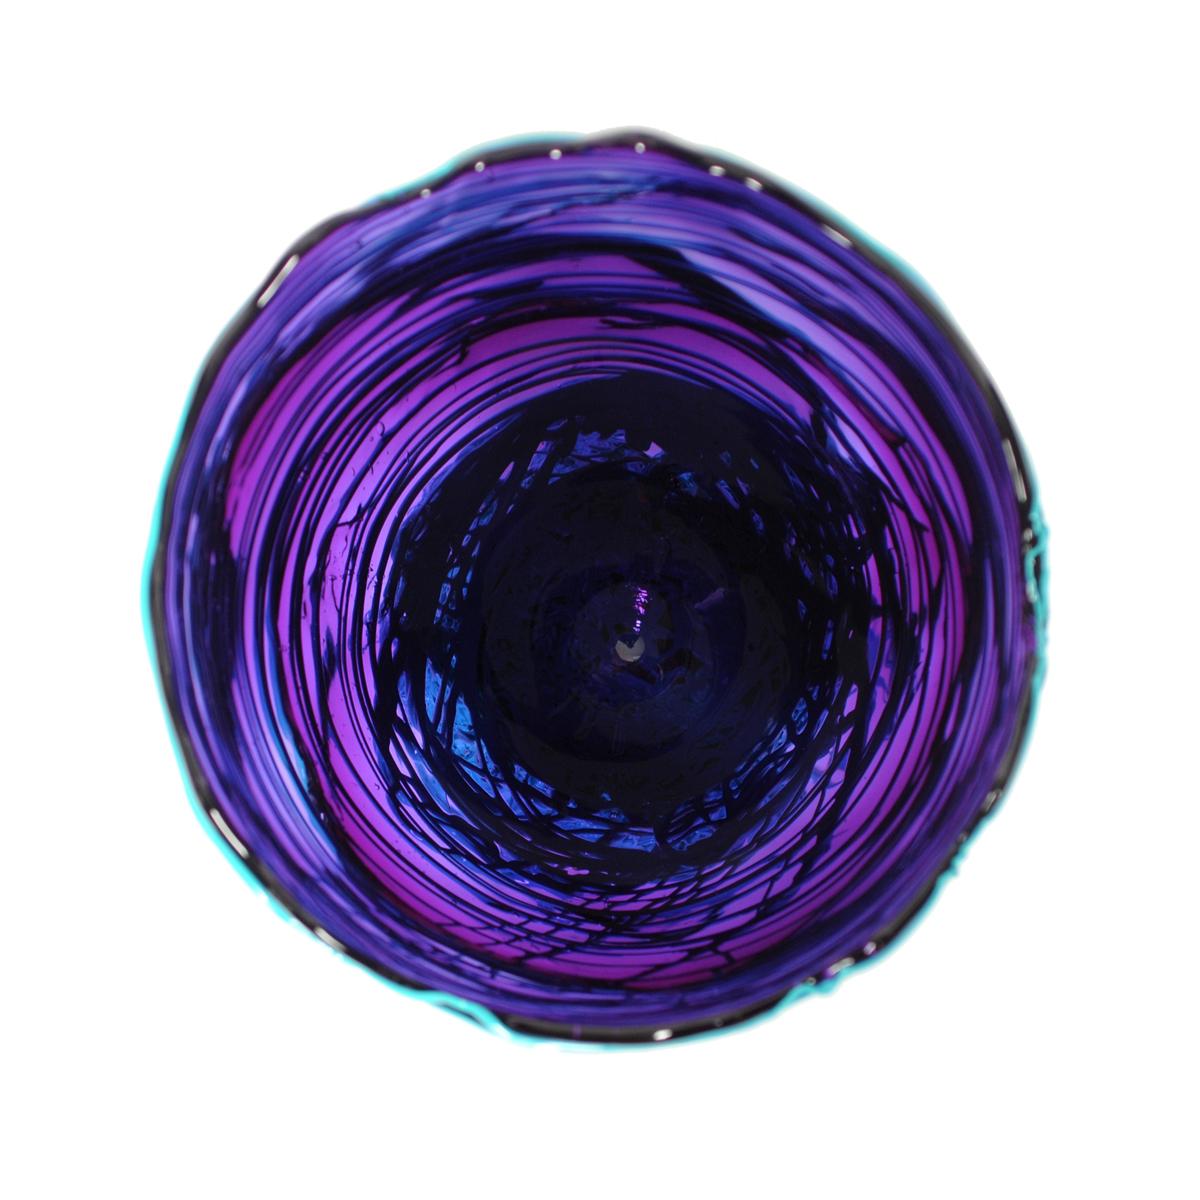 Italian Contemporary Gaetano Pesce Spaghetti L Vase Soft Resin Purple, Turquoise For Sale